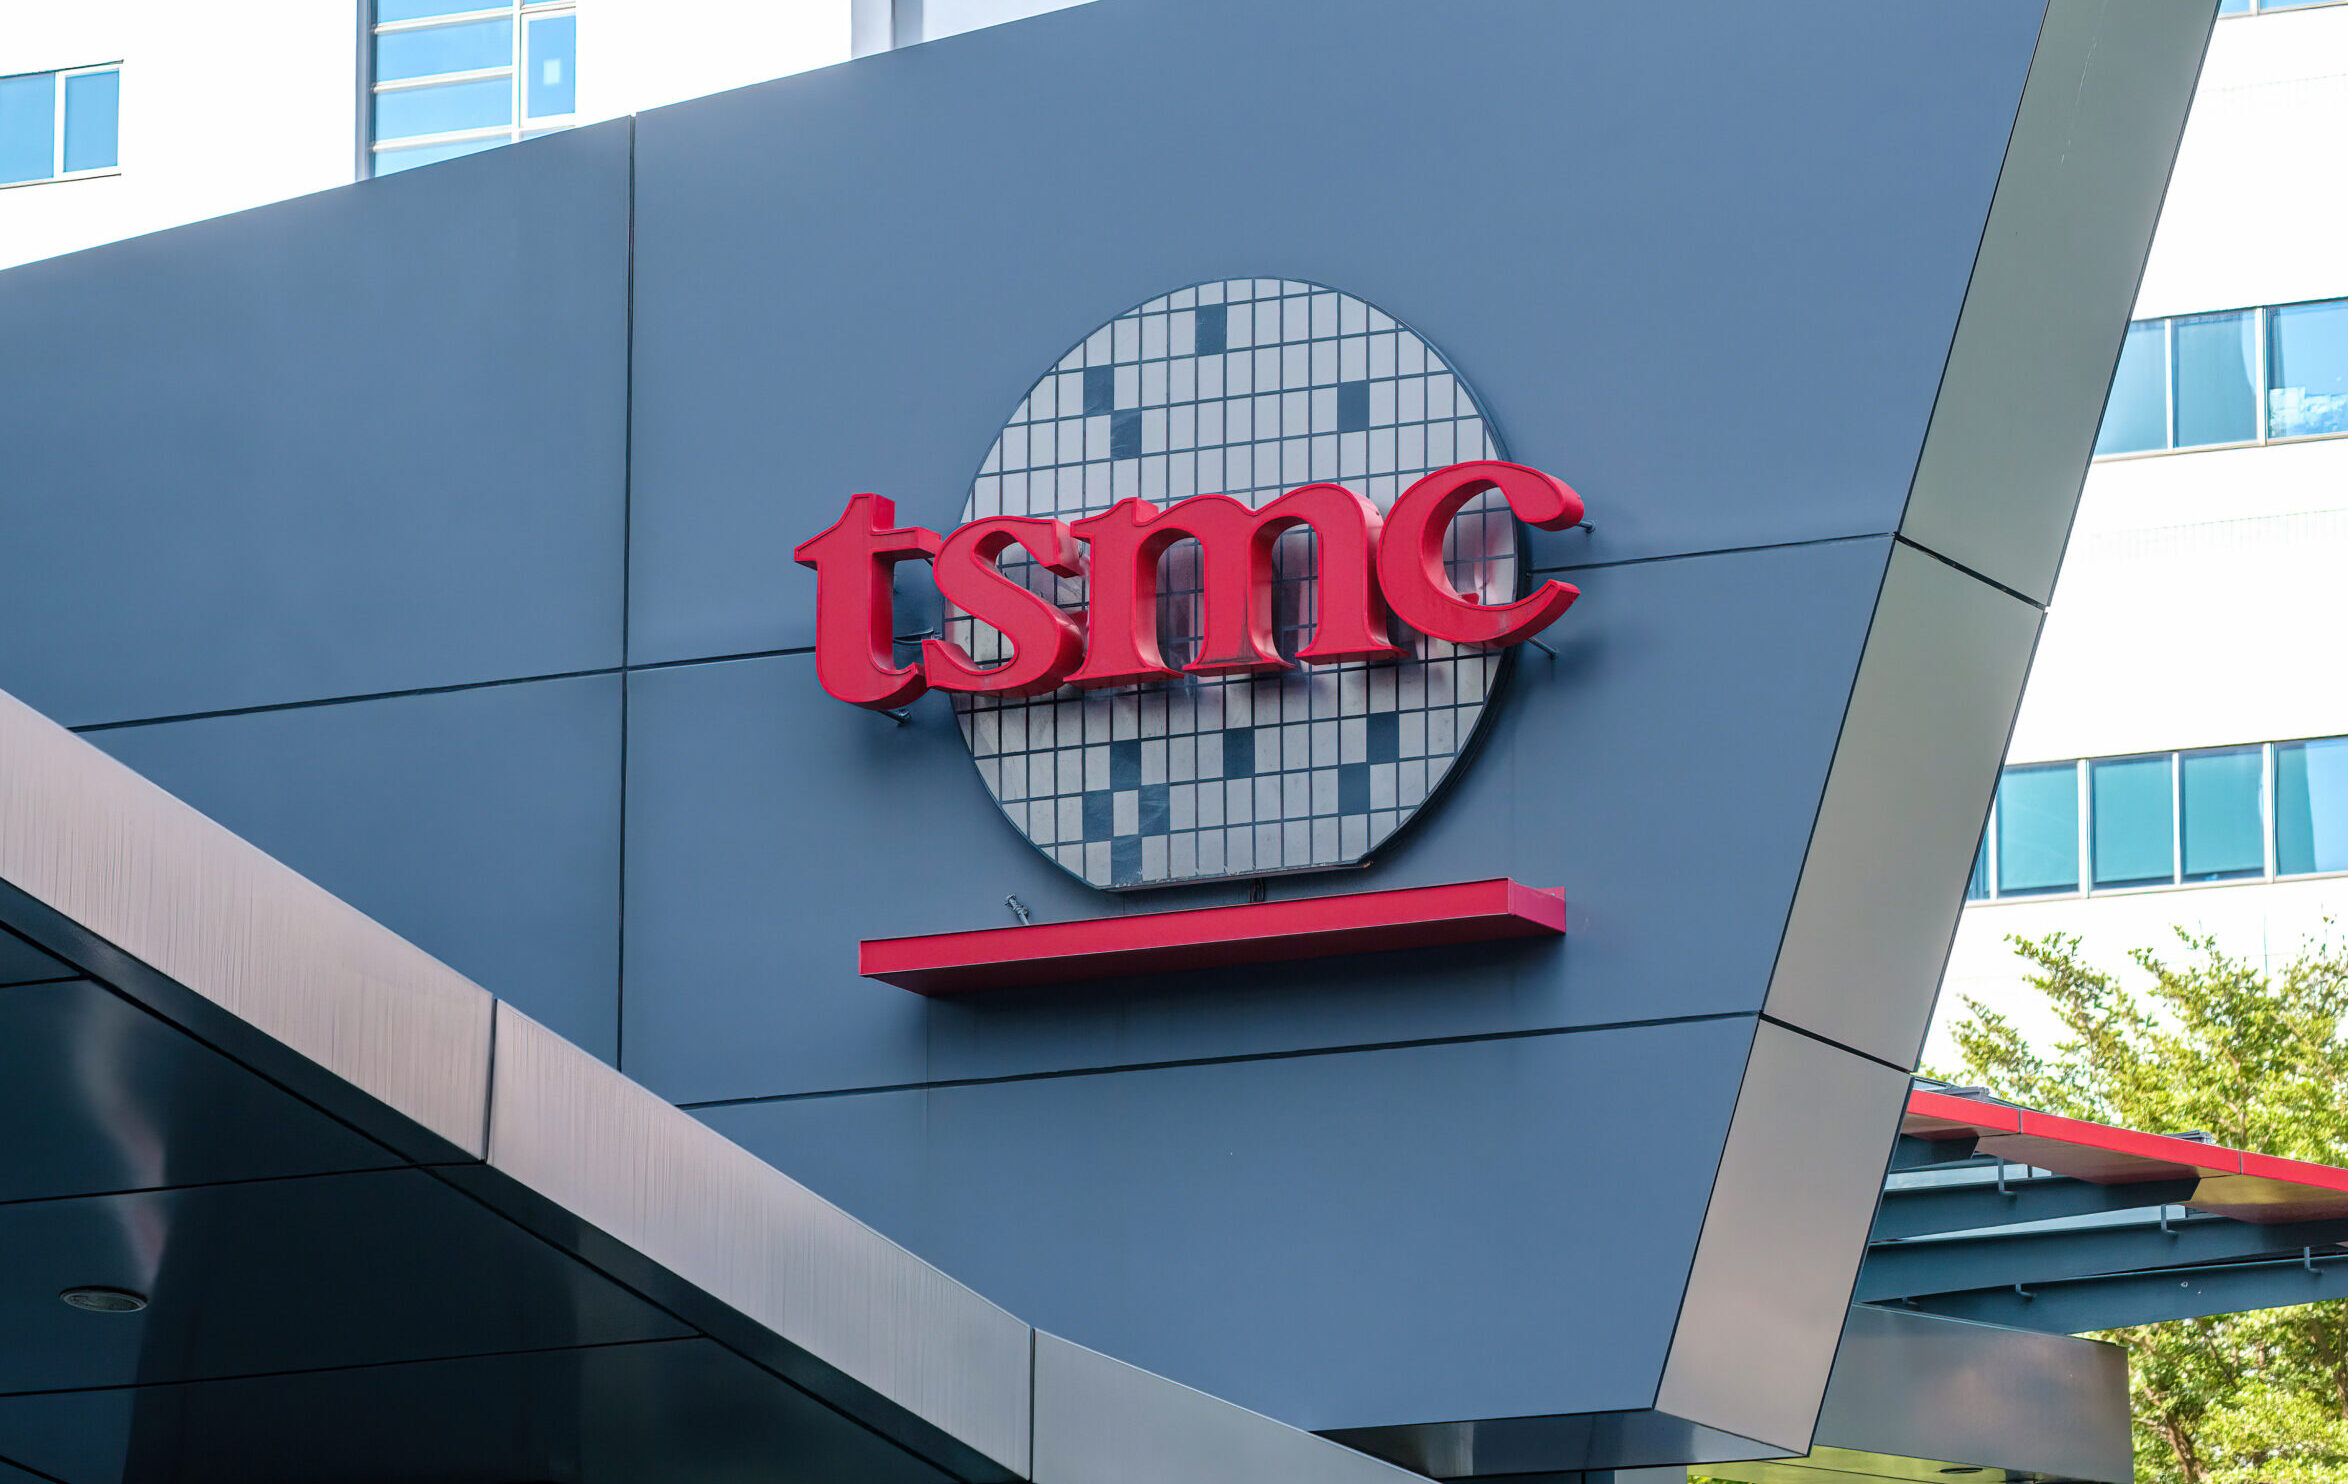 The TSMC (Taiwan Semiconductor Manufacturing Company) logo